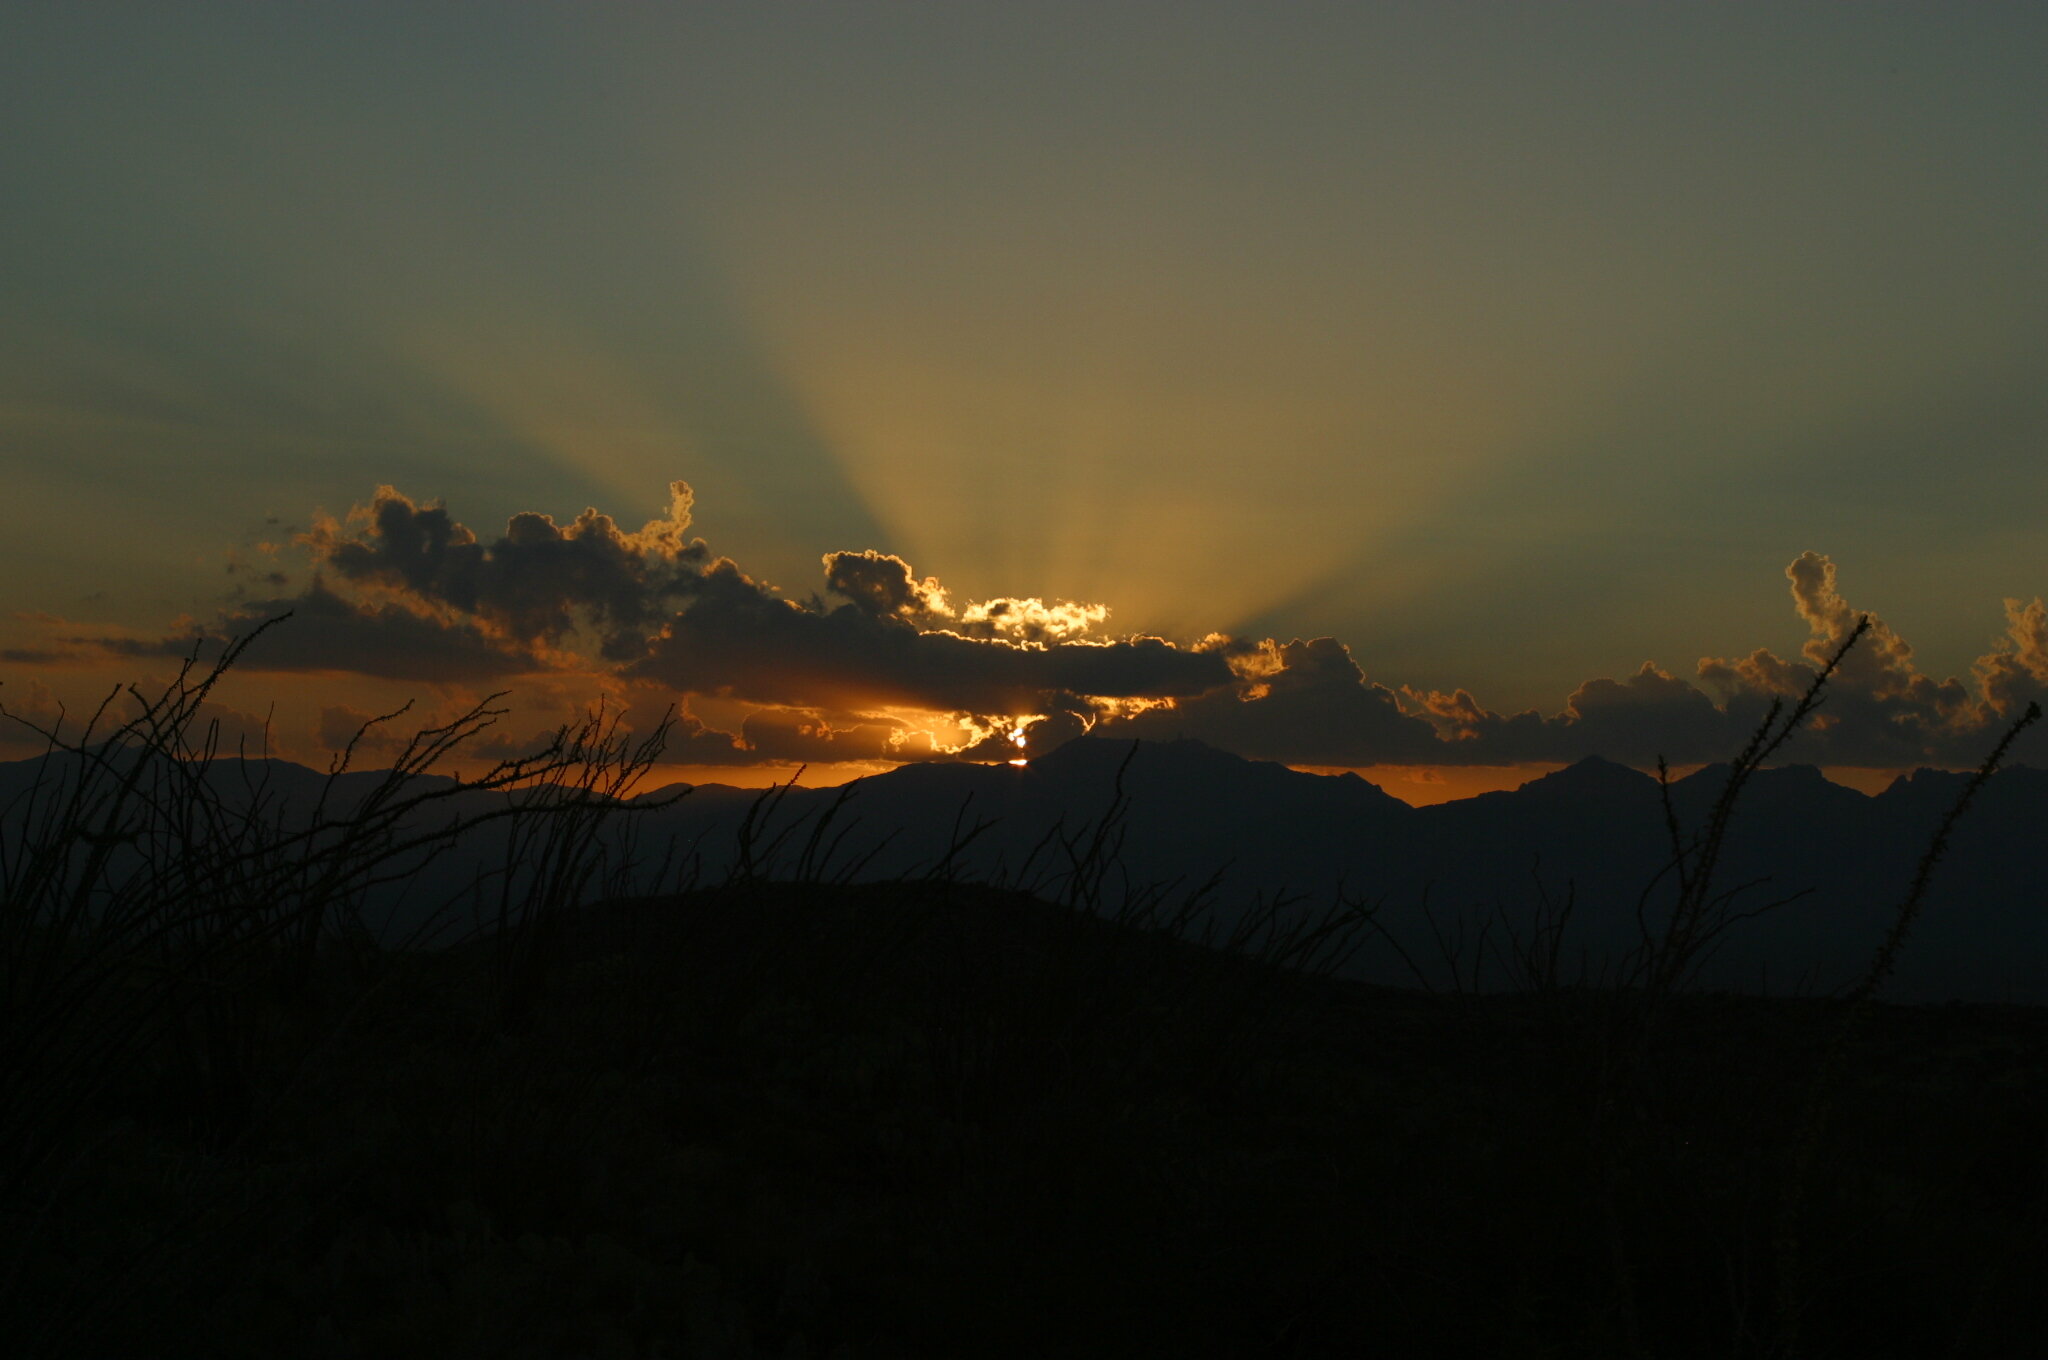  Cumulus and sun-ray shadows, Ravenrock, Southern Arizona, USA, by Roseann Hanson 